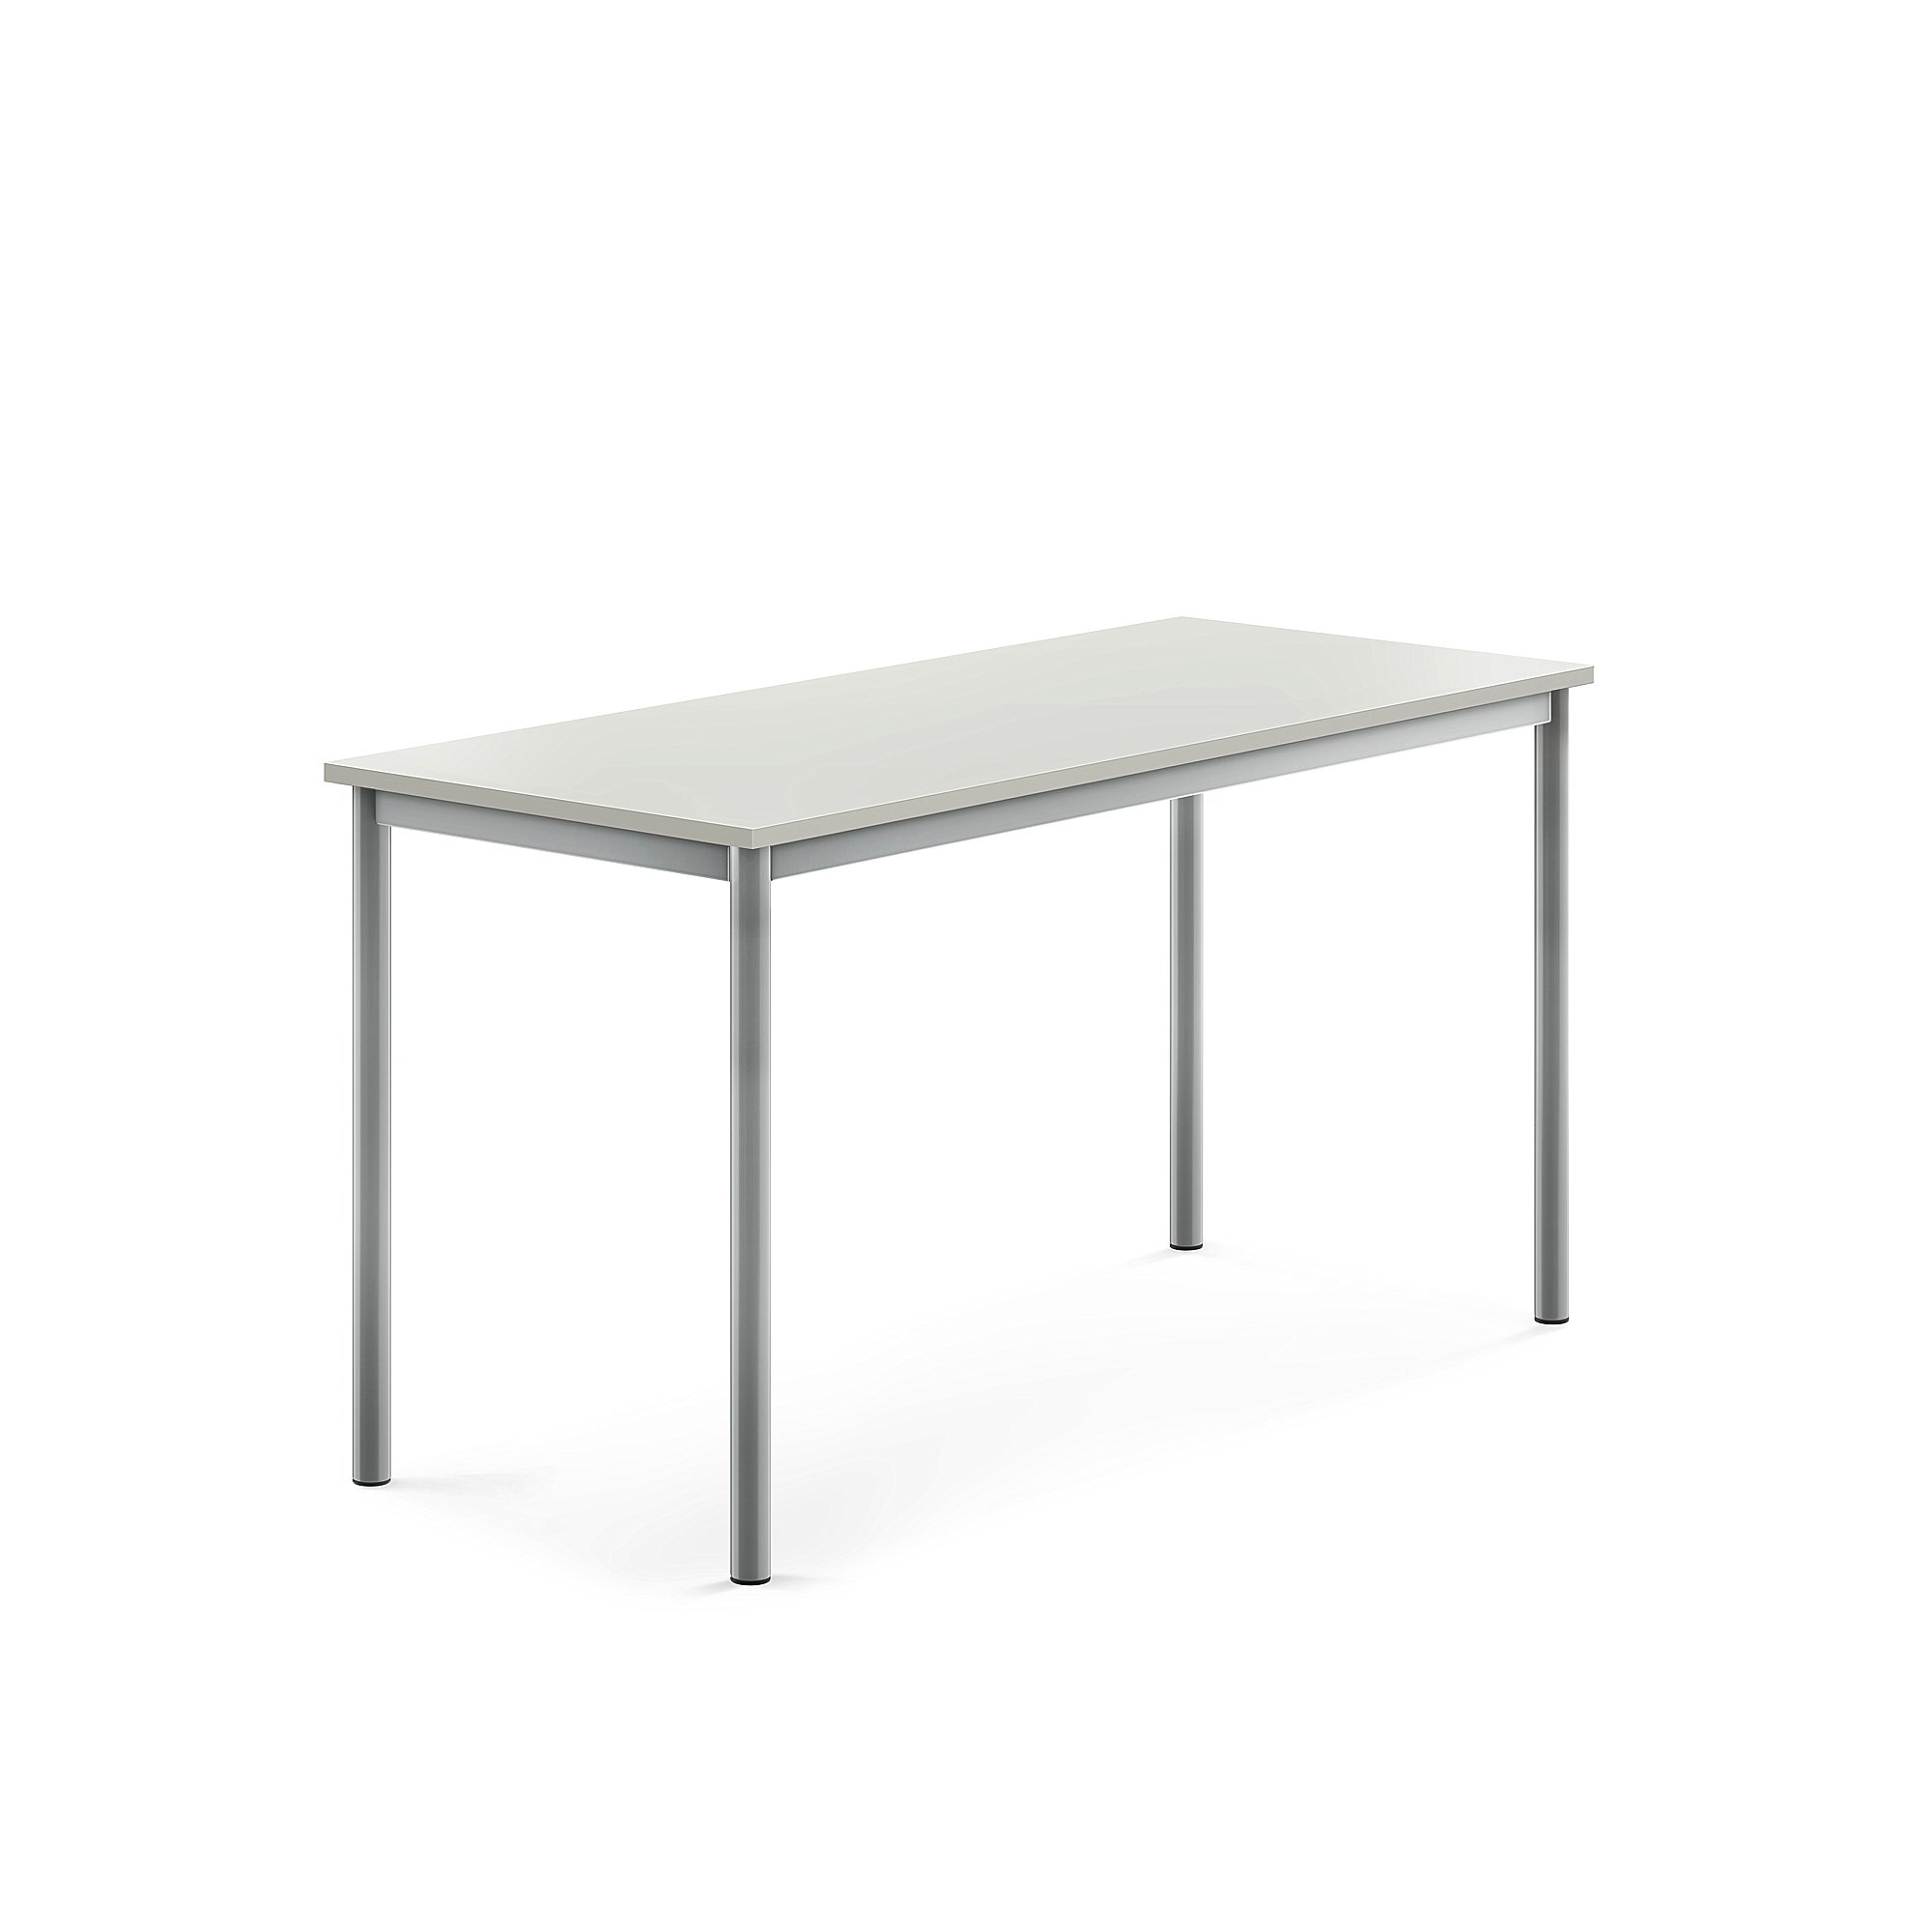 Stůl BORÅS, 1400x600x720 mm, stříbrné nohy, HPL deska, šedá